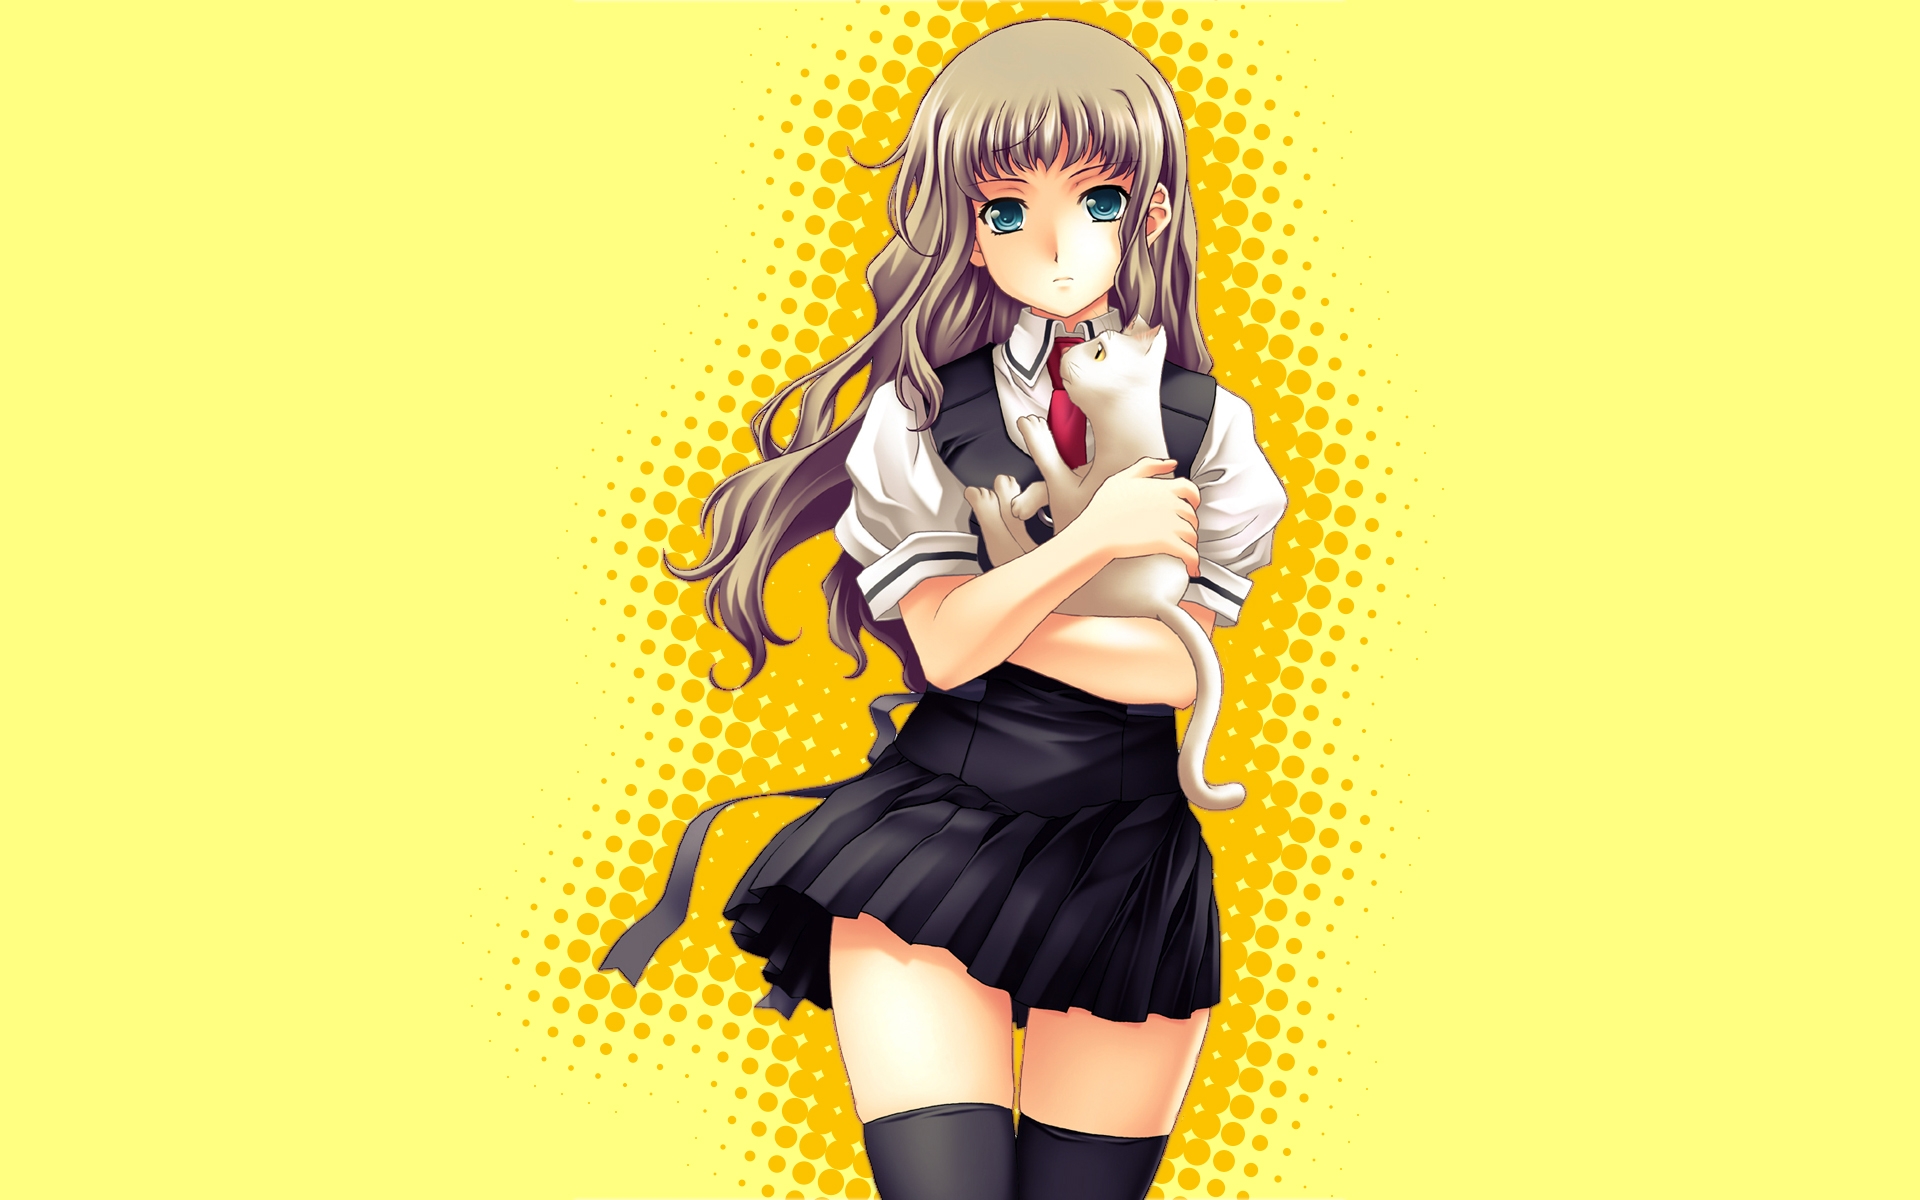 Cute Anime Manga Girl Icon Image Stock Vector (Royalty Free) 623608220 |  Shutterstock